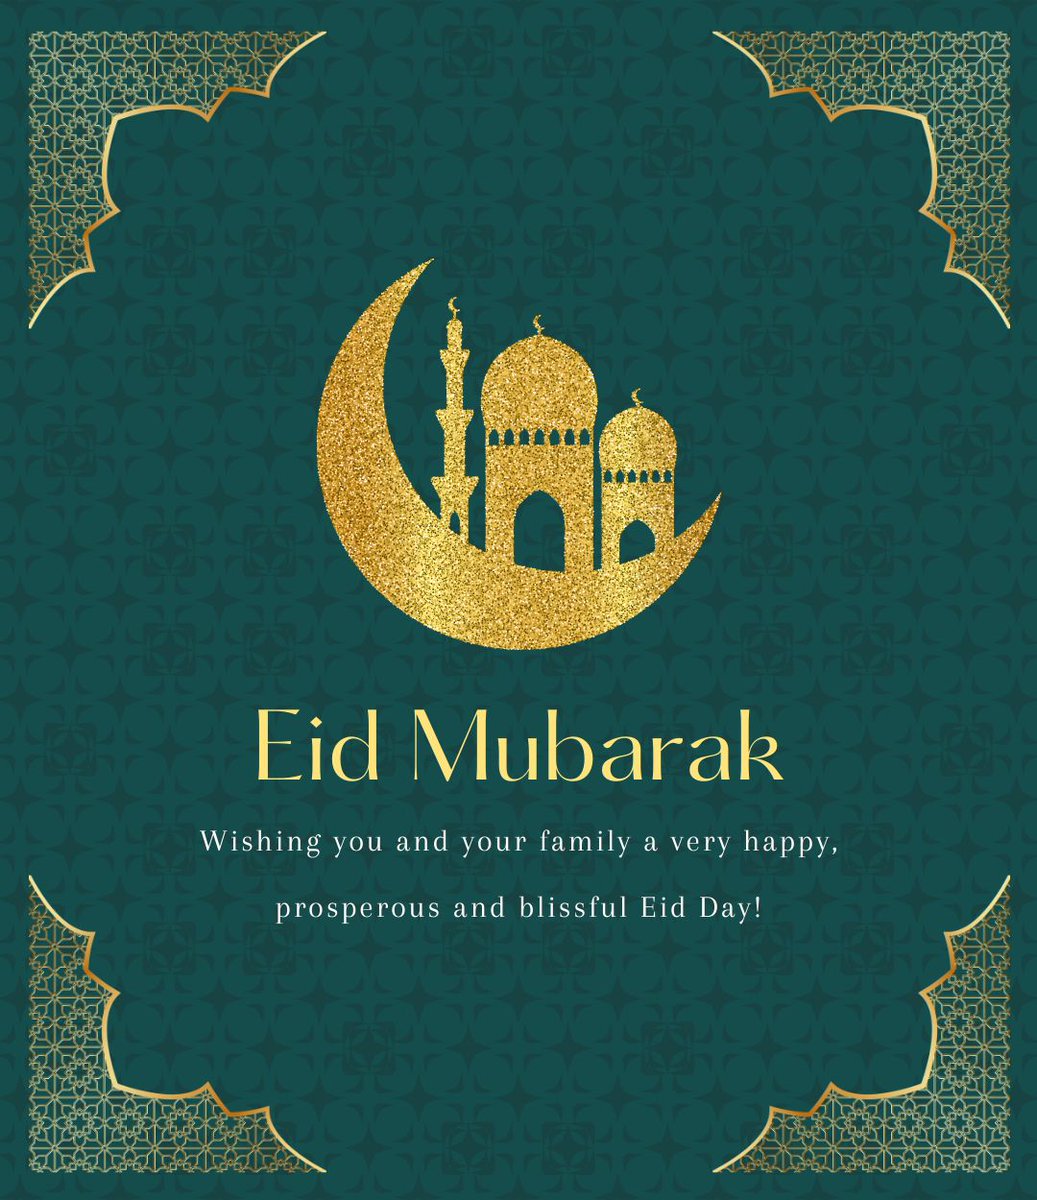 Happy Eid to all celebrating within the NCU and other Irish cricket communities 🌙 #EidMubarak